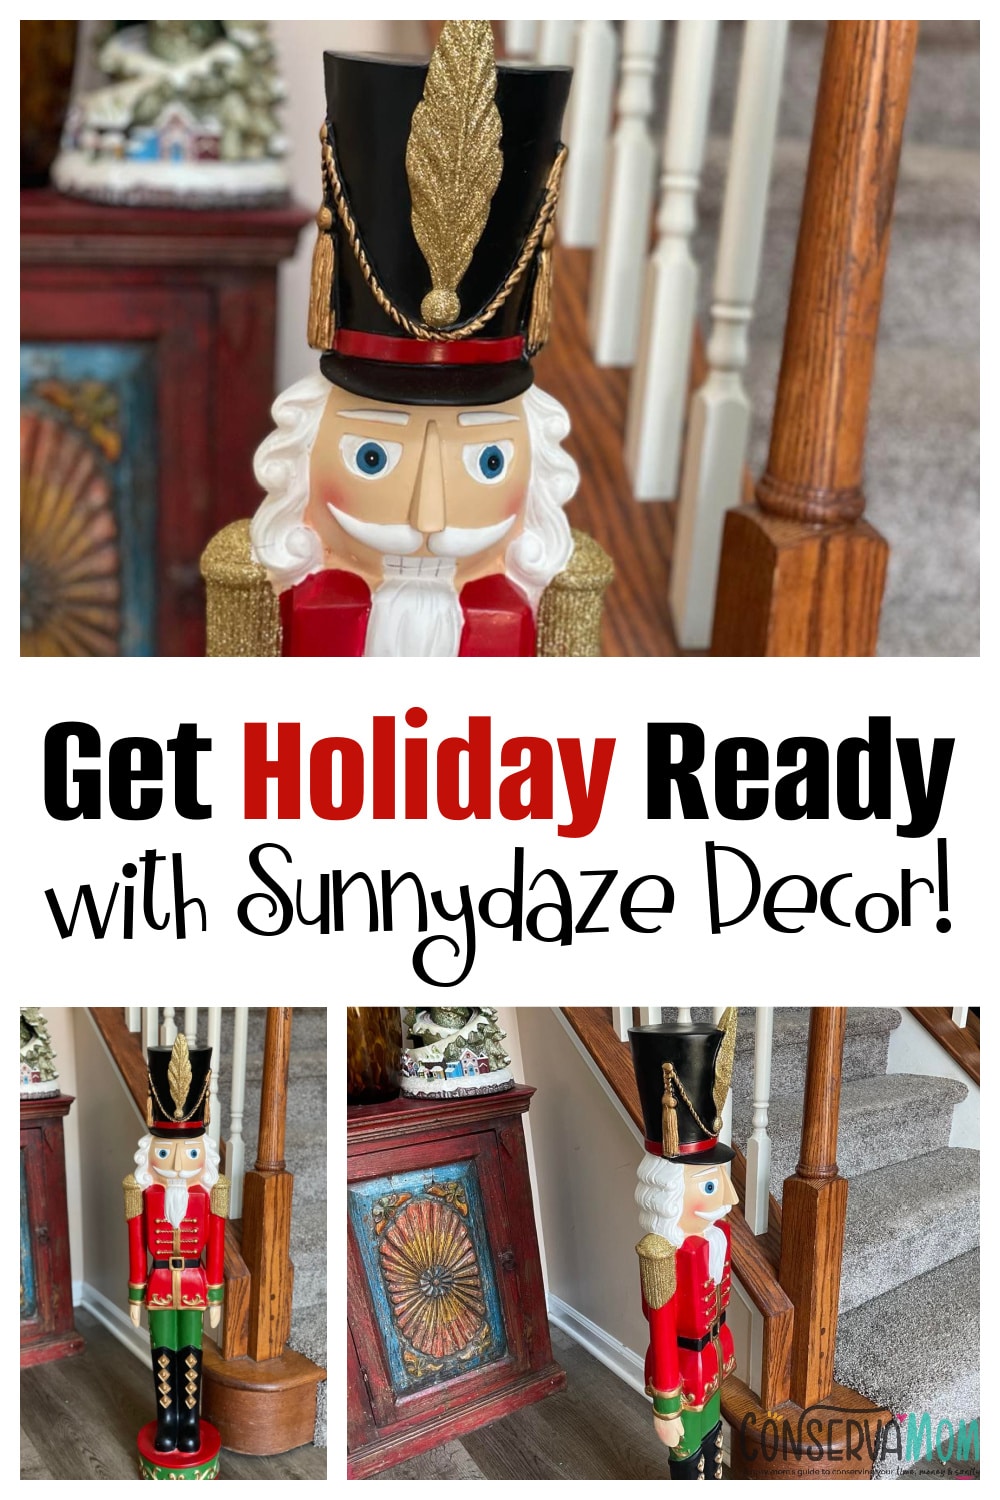 Get Holiday Ready with Sunnydaze Decor!